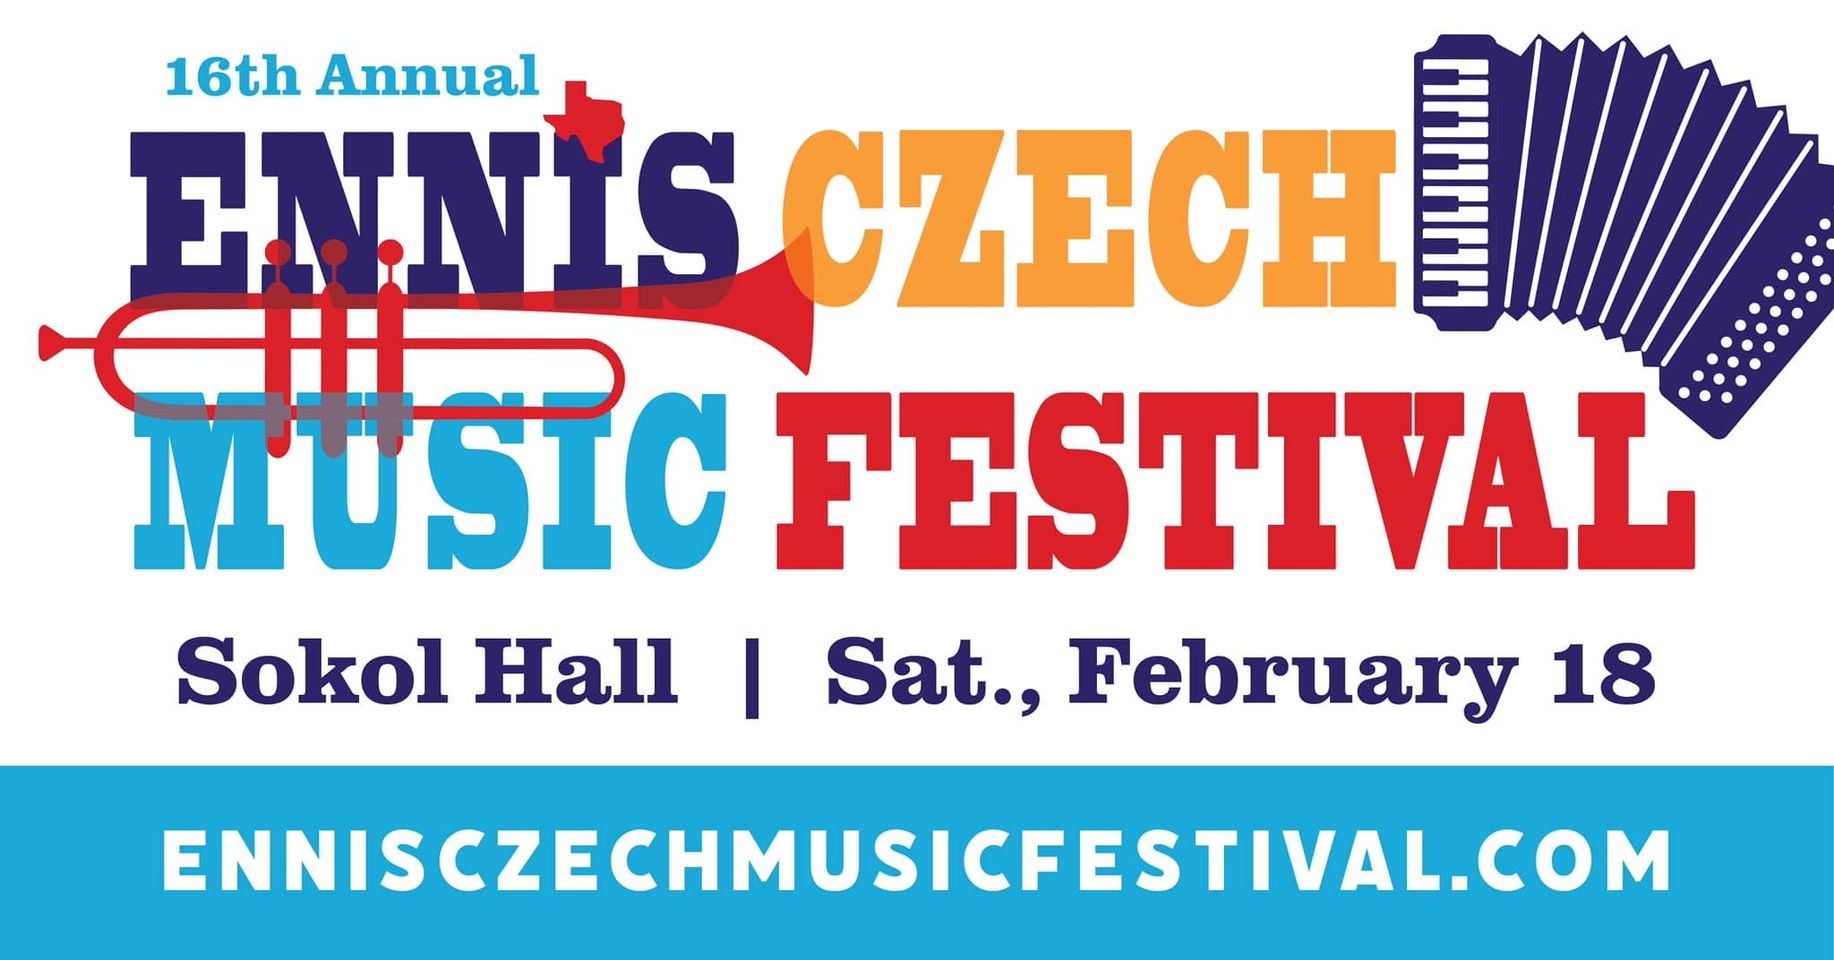 <strong>16th Annual Ennis Czech Music Festival</strong> 1 Ennis Czech festival CedarCreekLake.Online